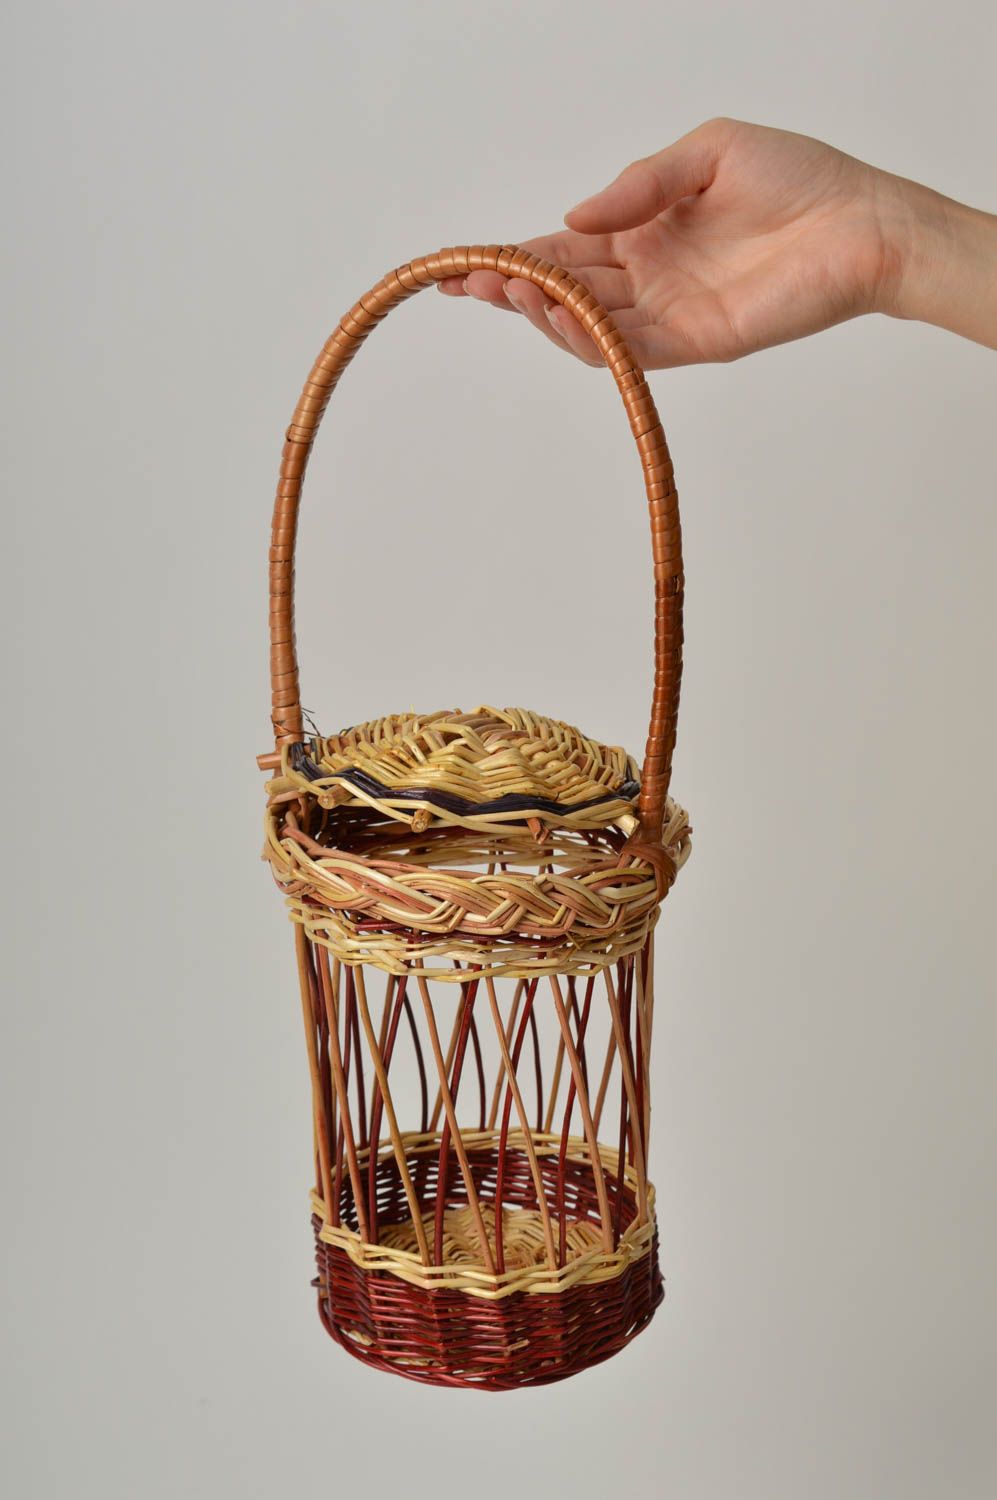 Unusual handmade woven cachepot interior decorating home goods gift ideas photo 5